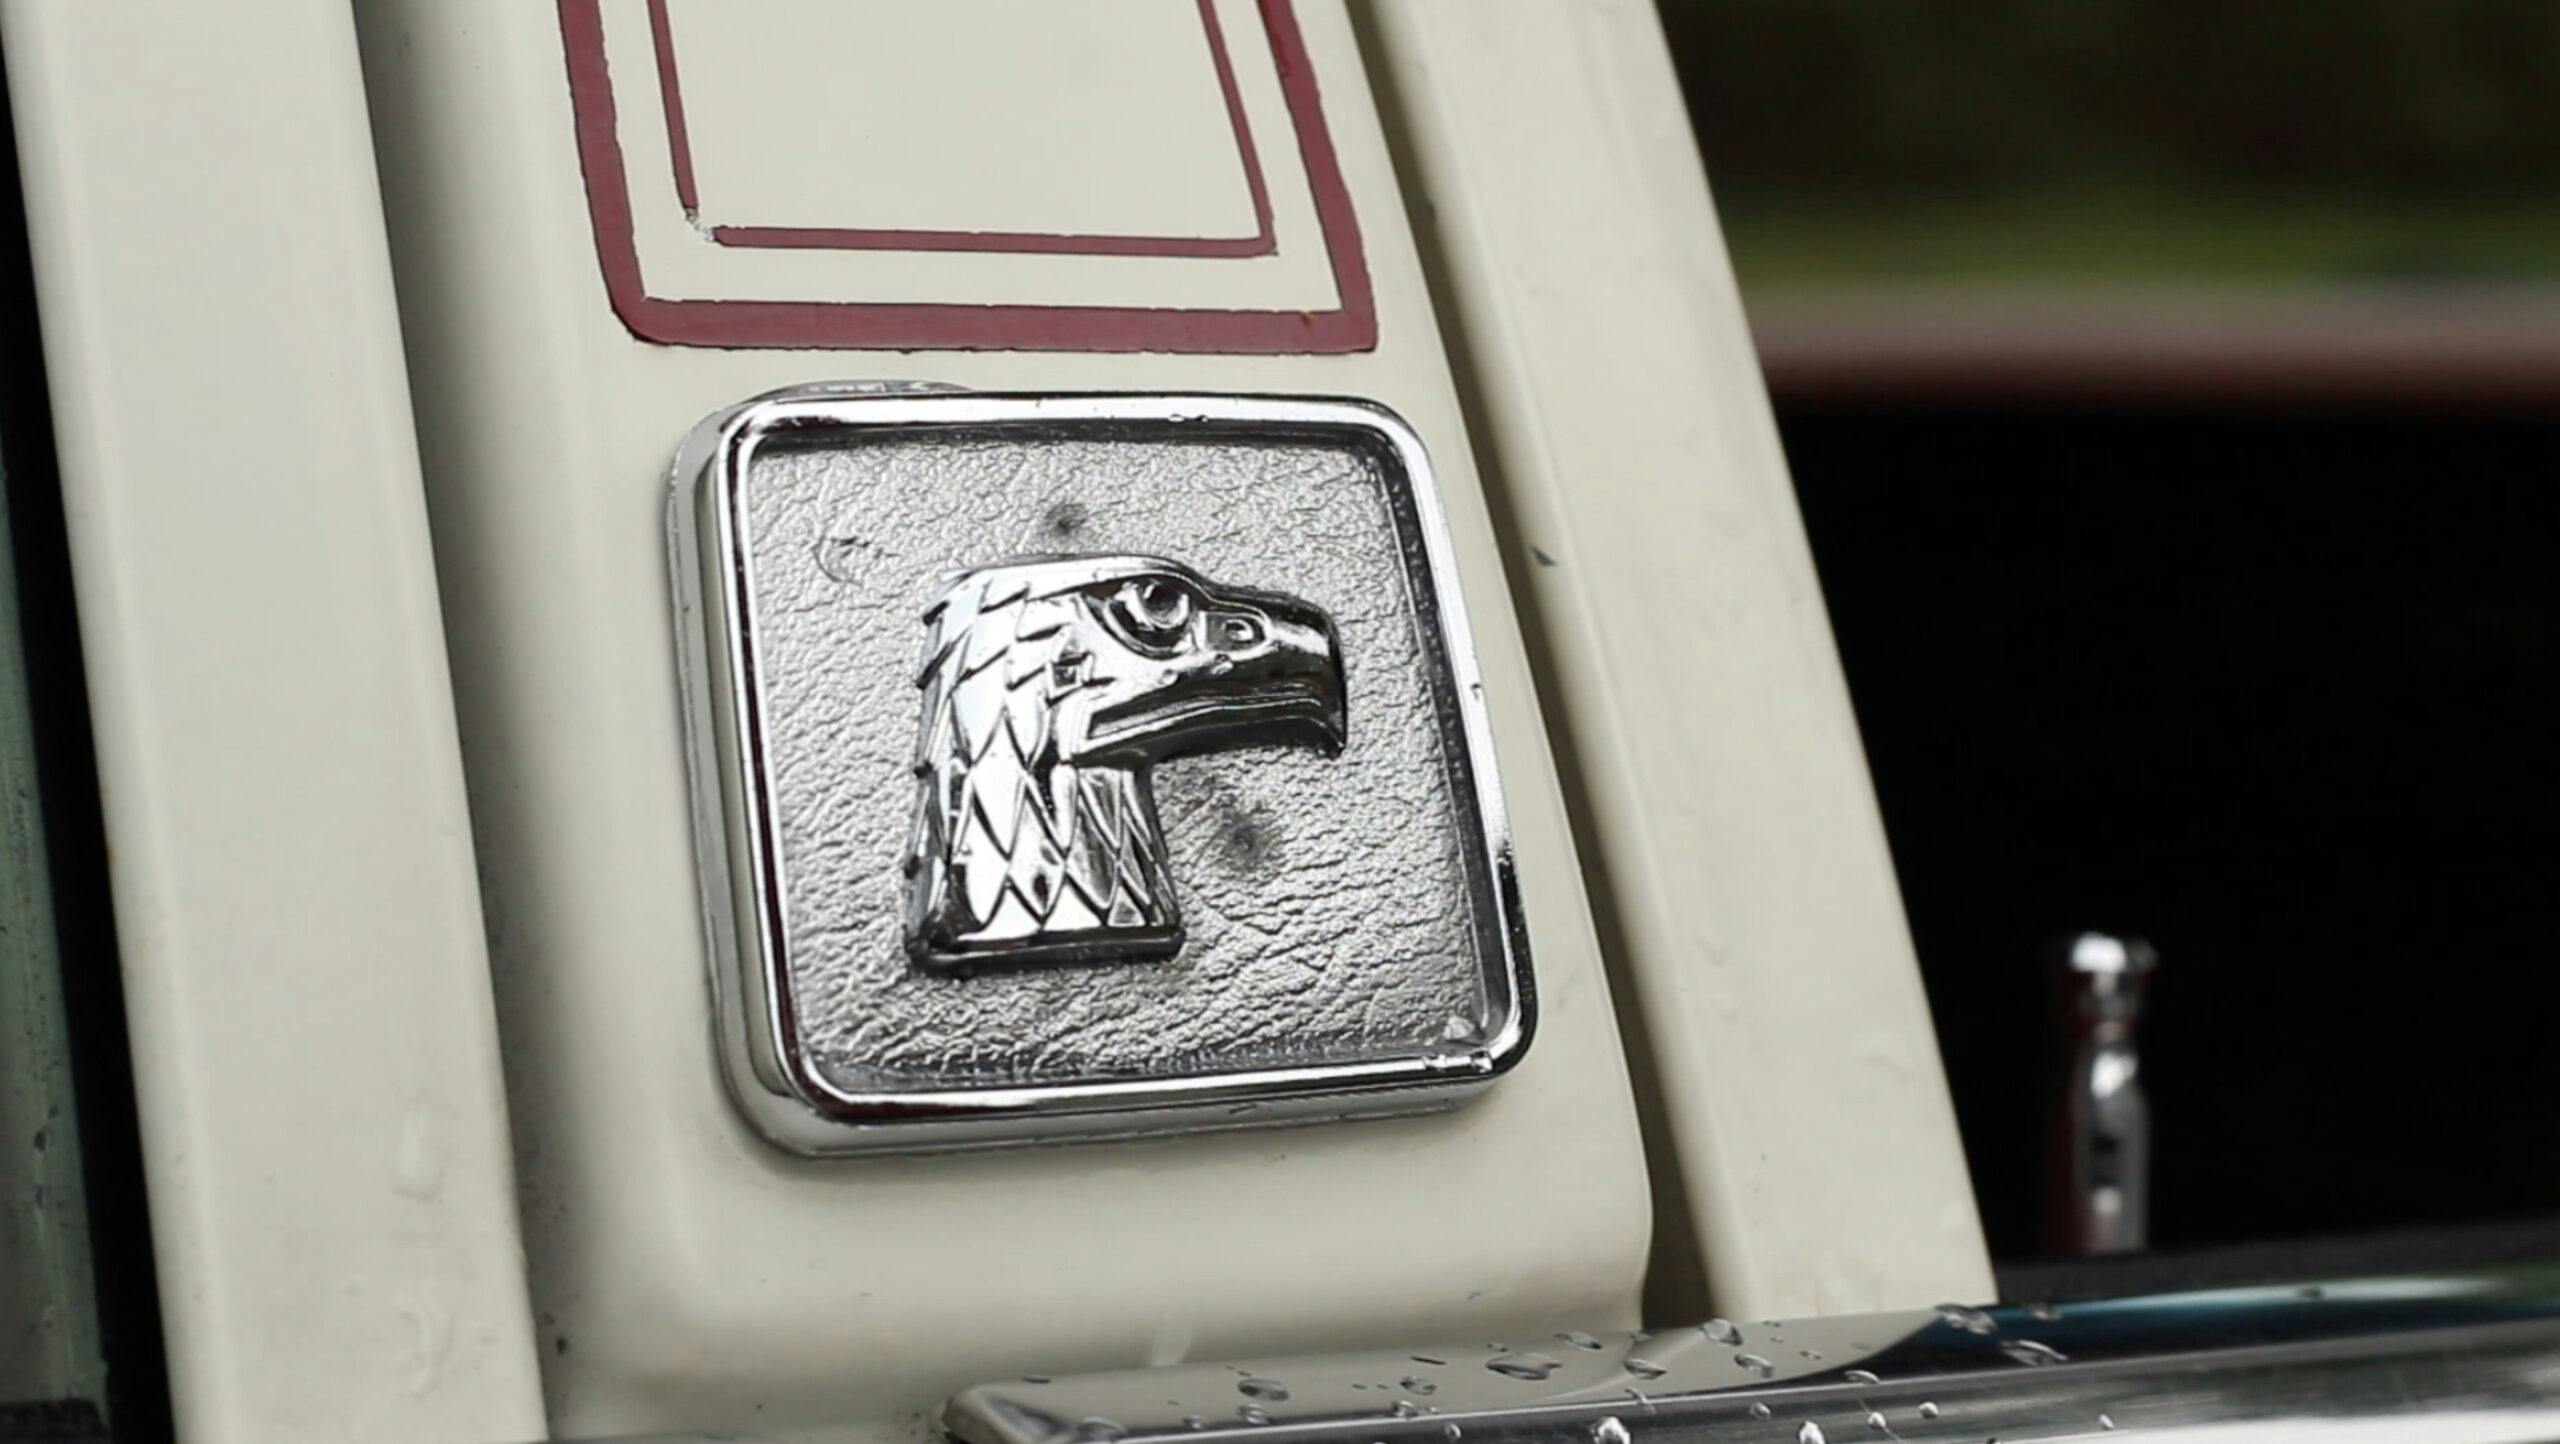 AMC Eagle emblem